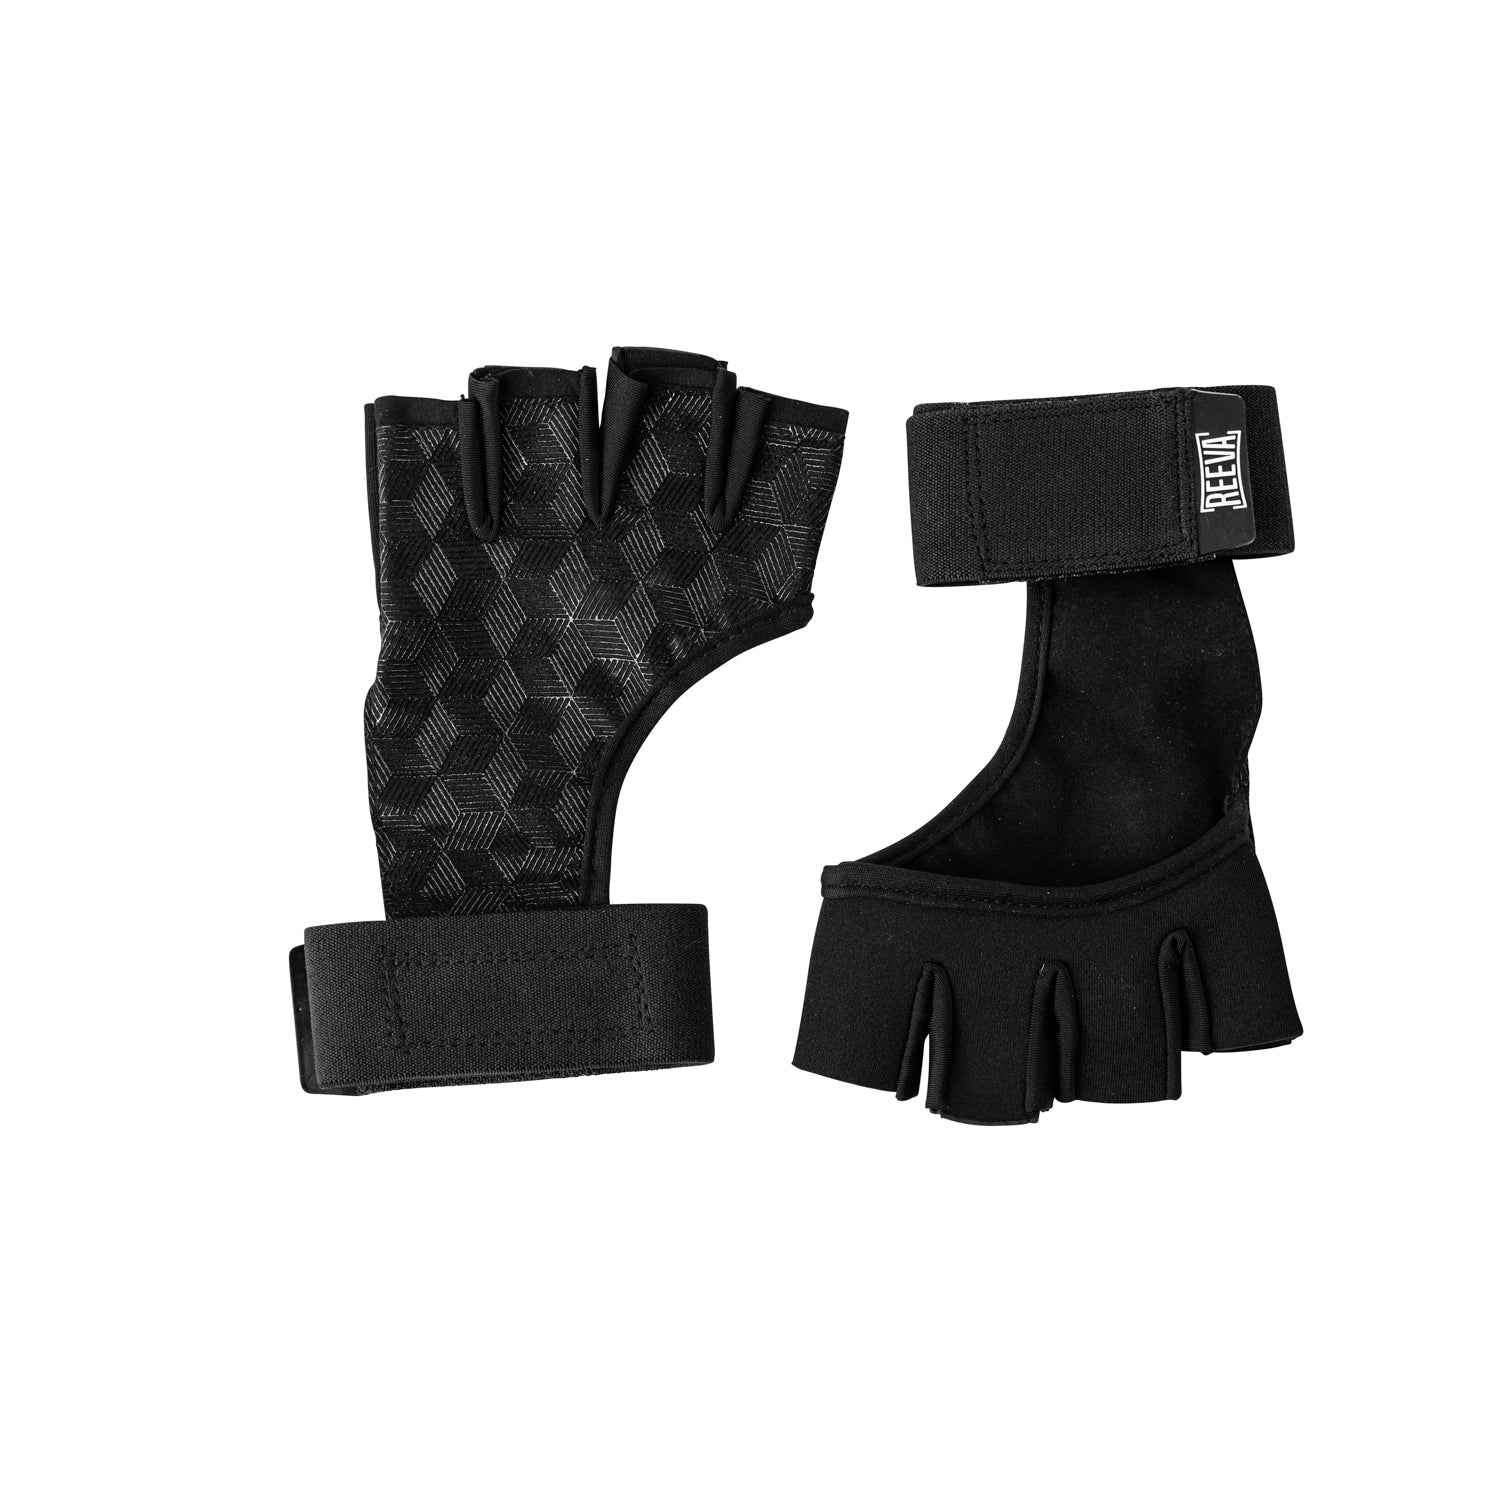 Sports gloves 2.0